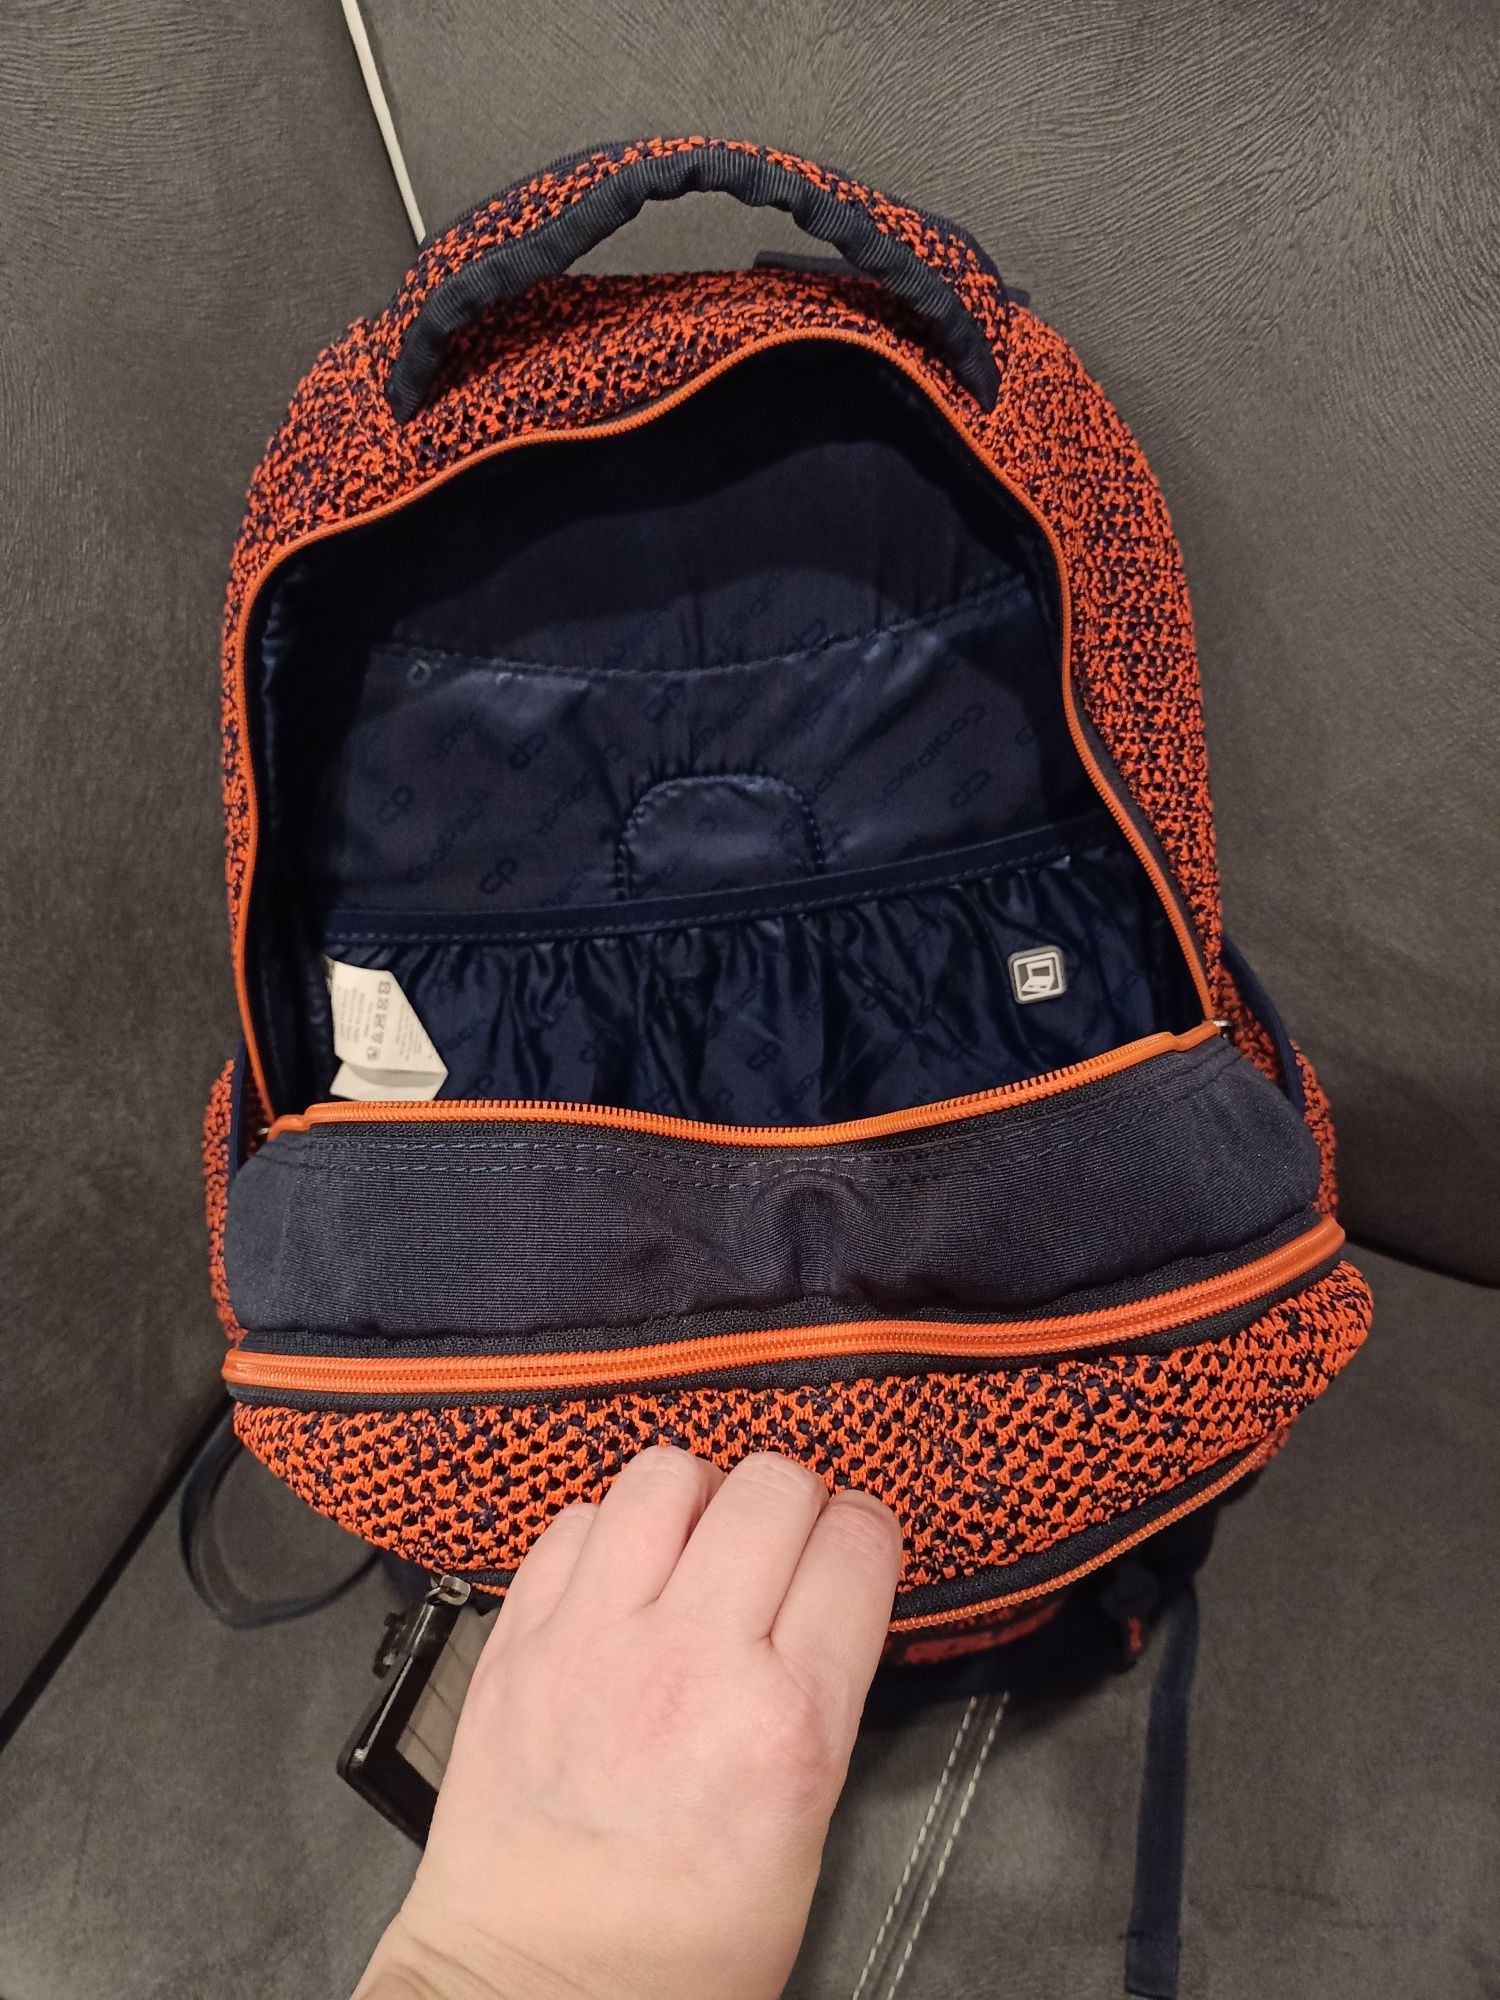 Plecak Cool Pack + piórnik KOMPLET - OKAZJA